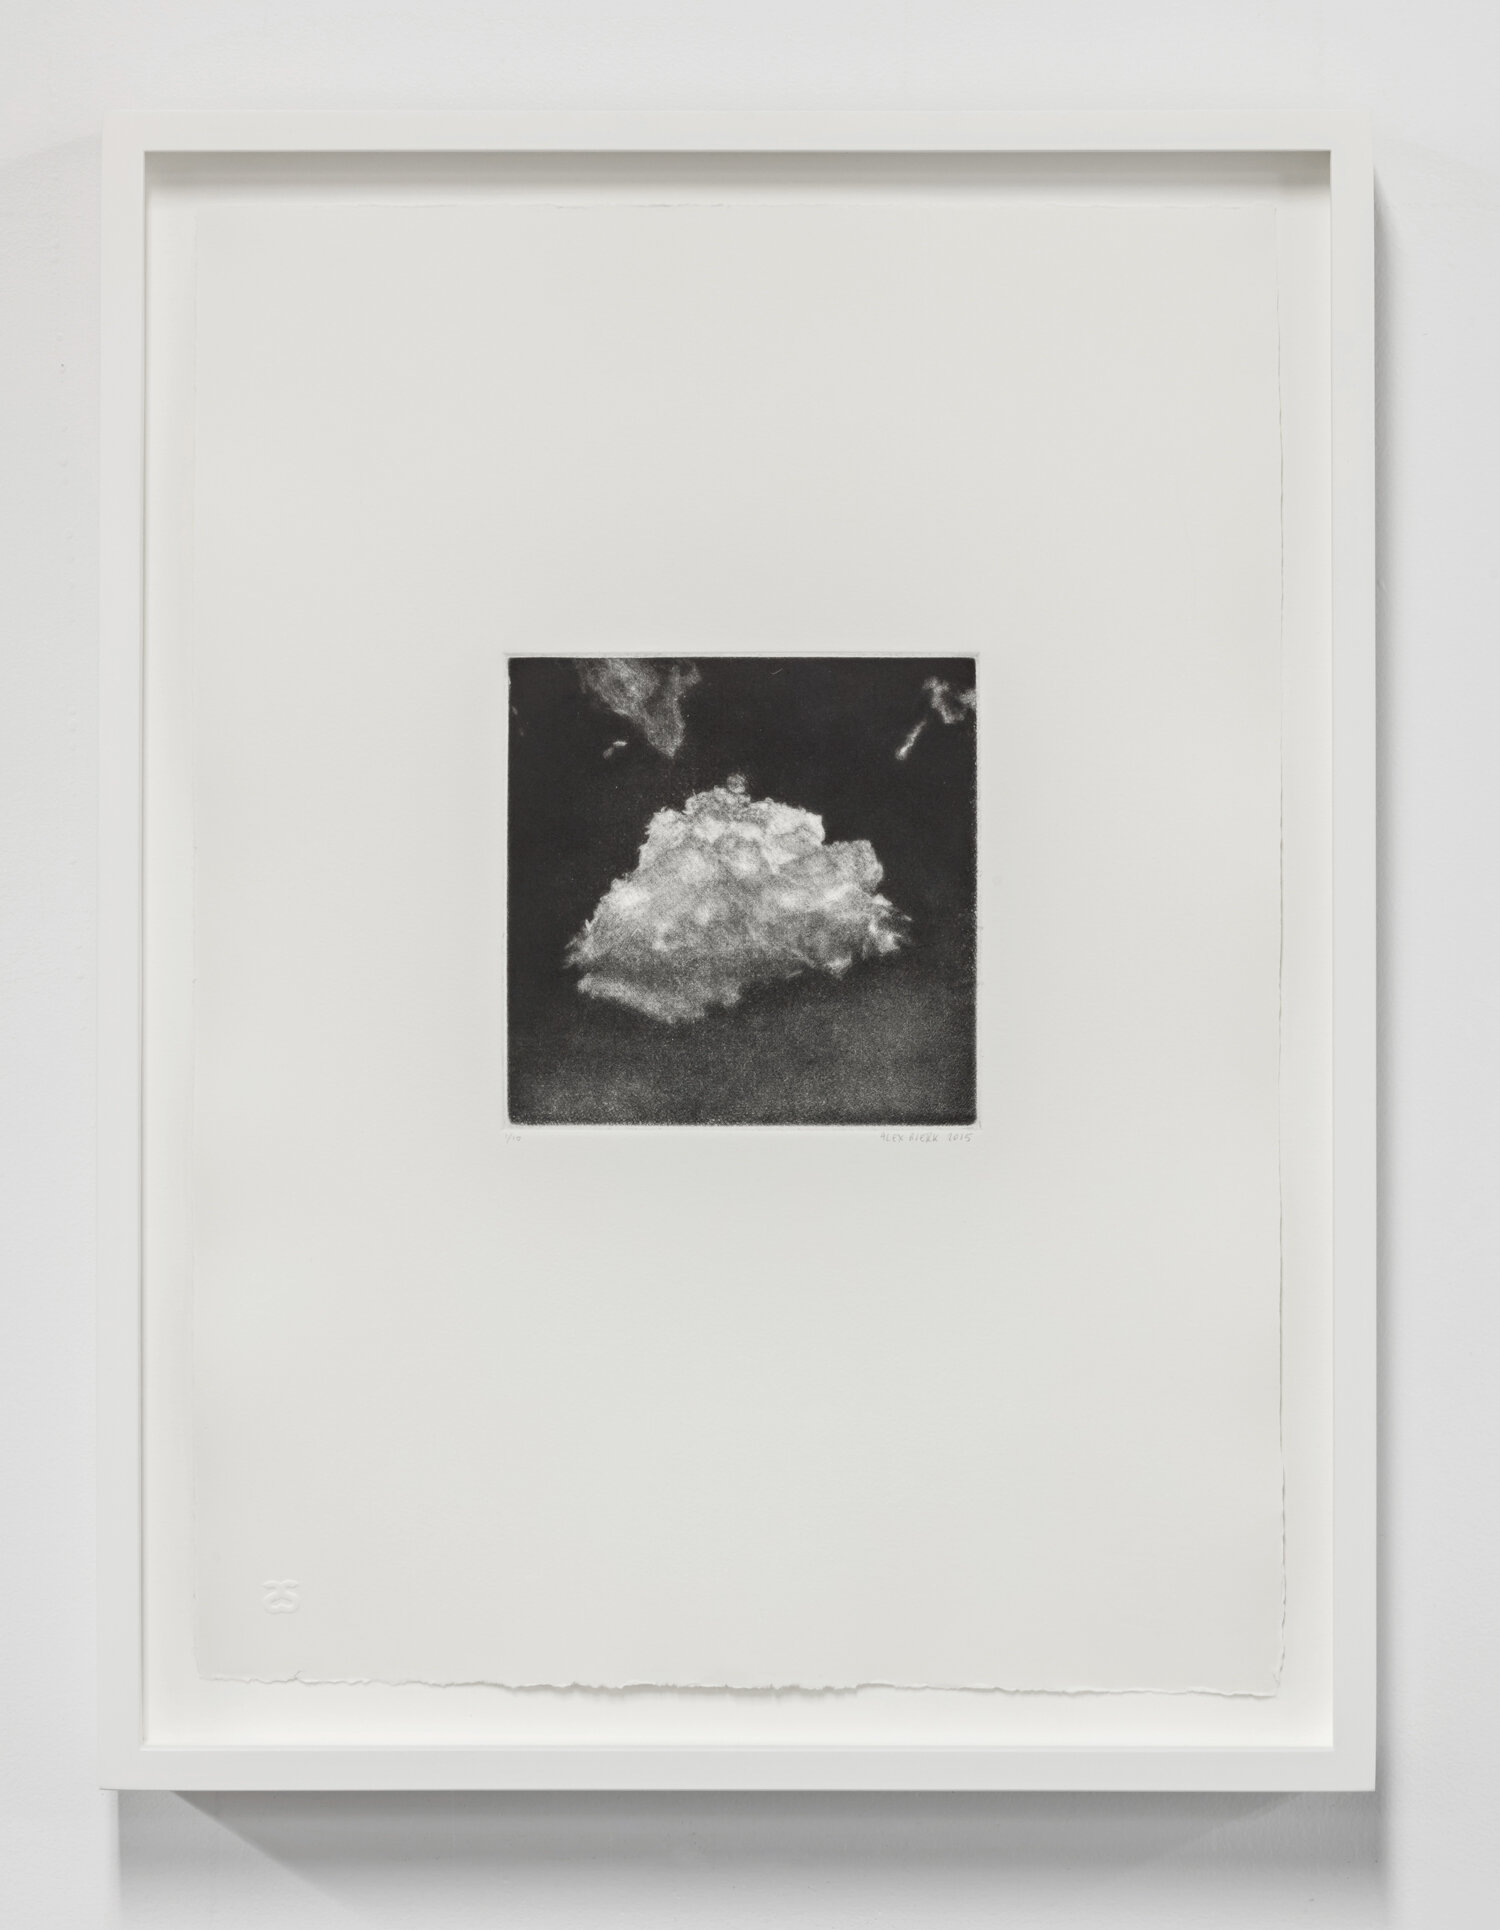  Alex Bierk  Untitled (Cloud) , 2015 Mezzotint print, 11.25" x 15.5" Signed edition of 10 